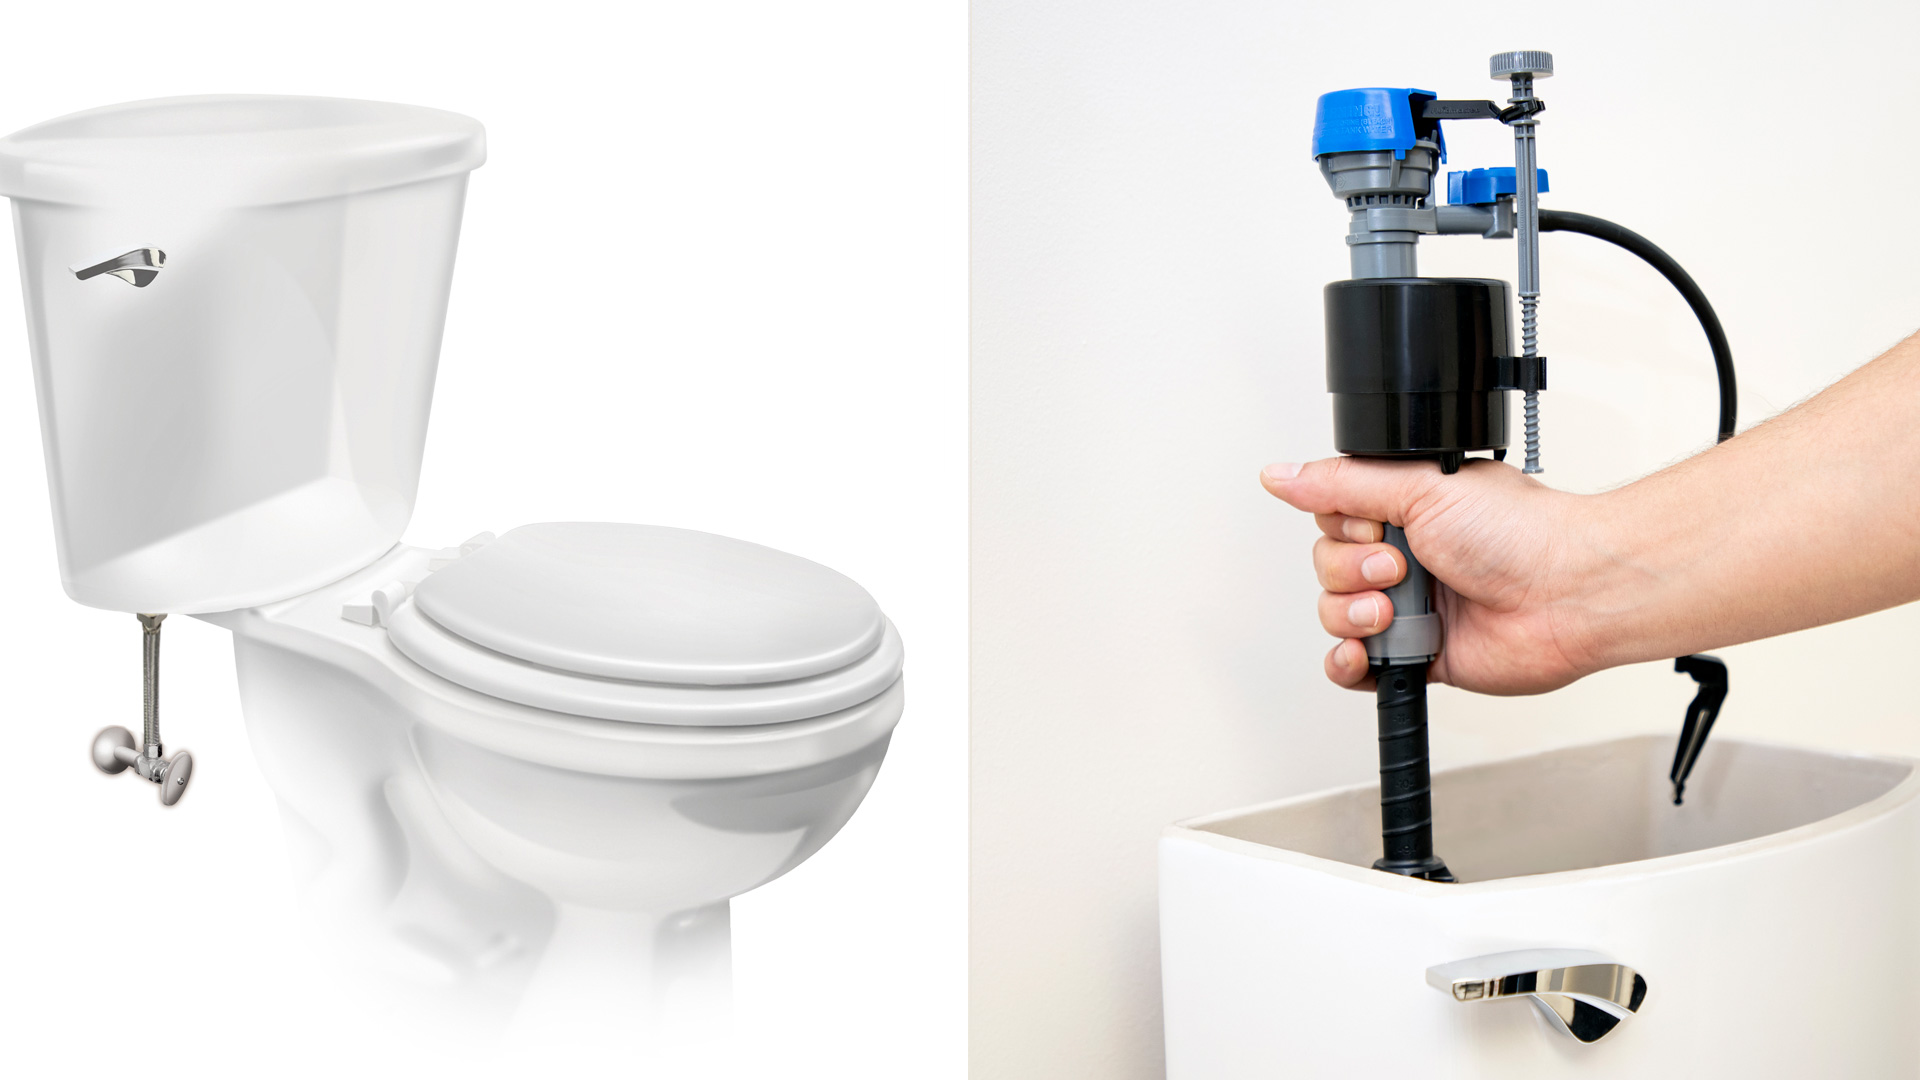 Toilet replacement parts make flush better rbc worobetz place saskatoon sk